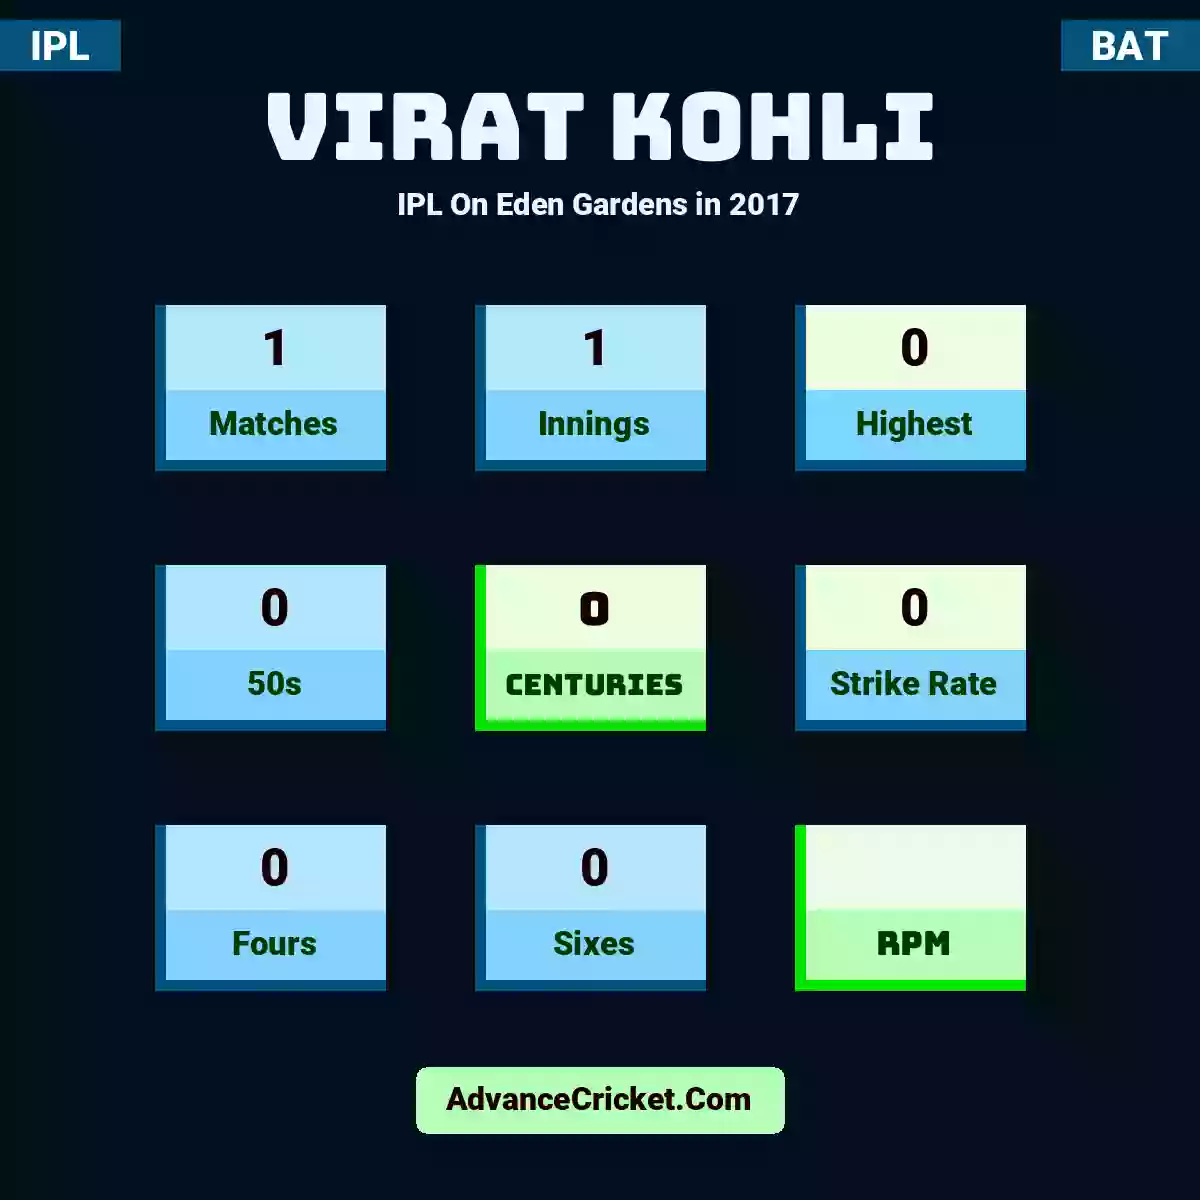 Virat Kohli IPL  On Eden Gardens in 2017, Virat Kohli played 1 matches, scored 0 runs as highest, 0 half-centuries, and 0 centuries, with a strike rate of 0. V.Kohli hit 0 fours and 0 sixes.